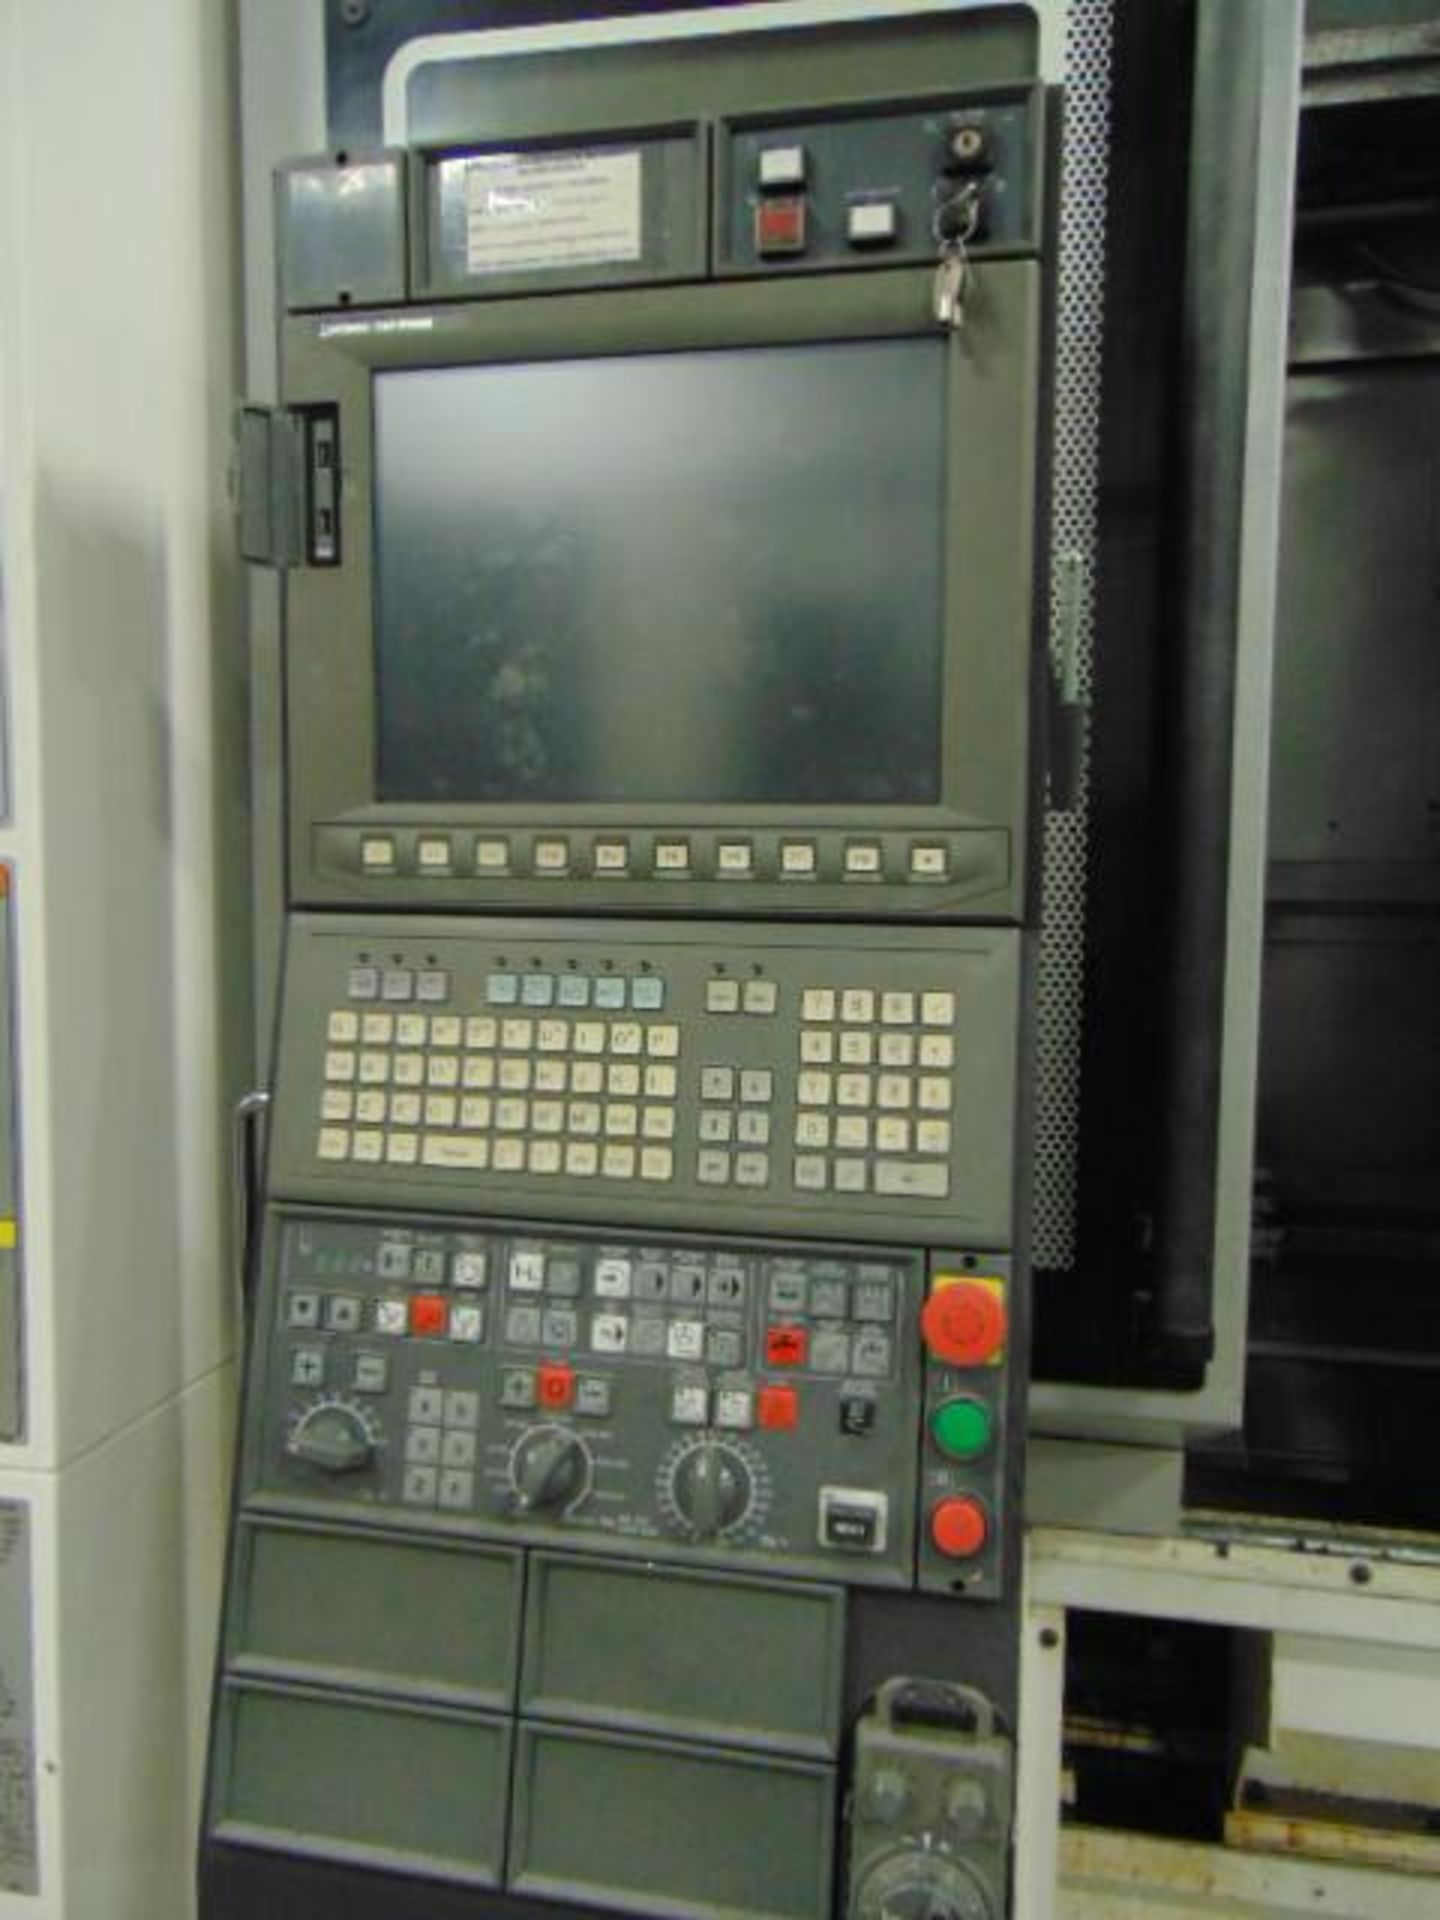 4-AXIS HORIZONTAL MACHINING CENTER OKUMA MDL. MB-5000H, 2016, 0SP-P300M CNC control, 19.7" x 19.7" p - Image 2 of 25